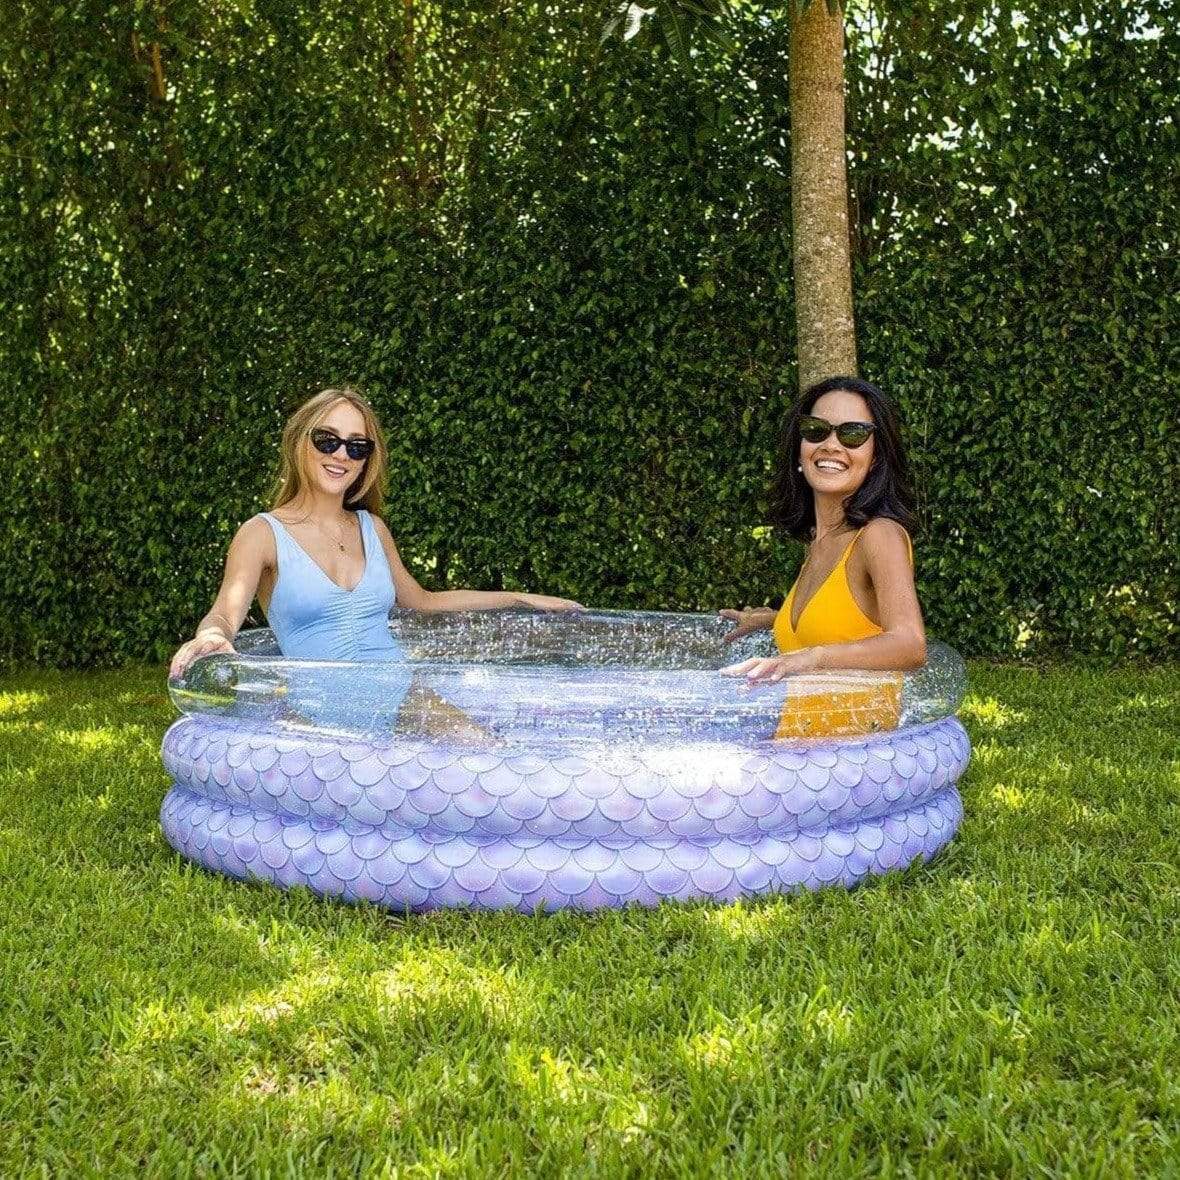 Inflatable Sunning Pool Mermaid Glitter PoolCandy